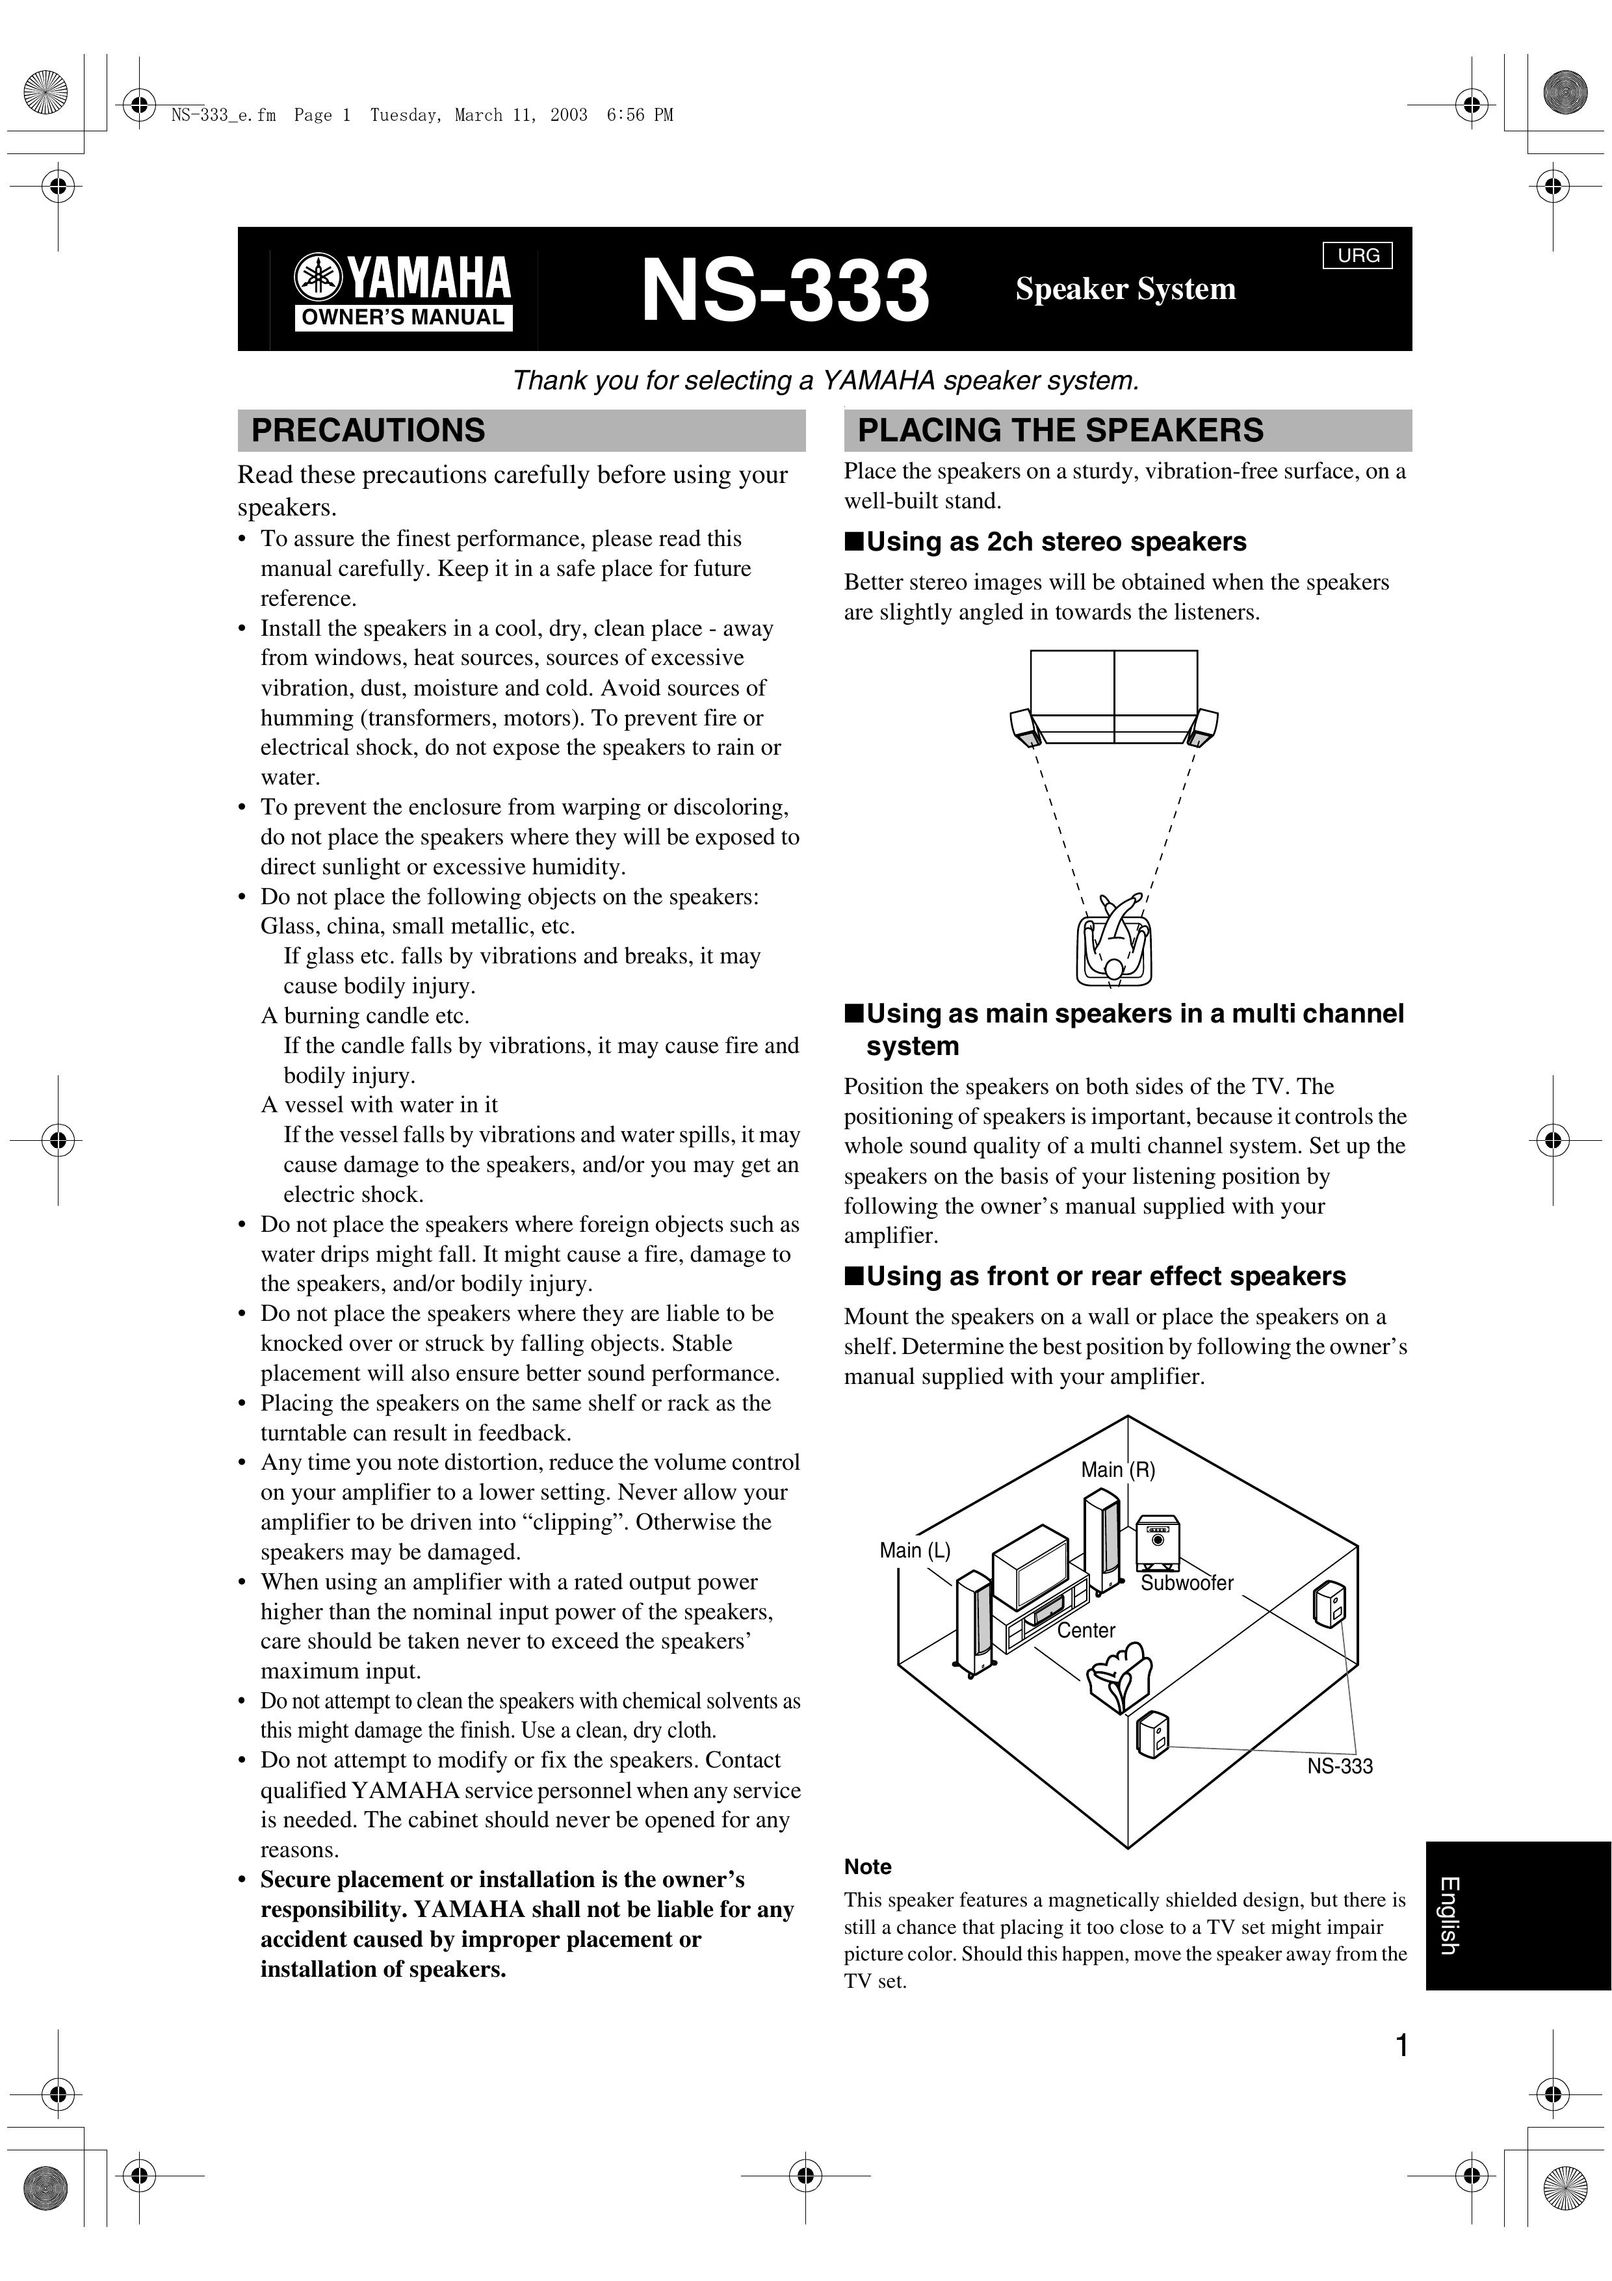 Yamaha NS-333 Speaker User Manual